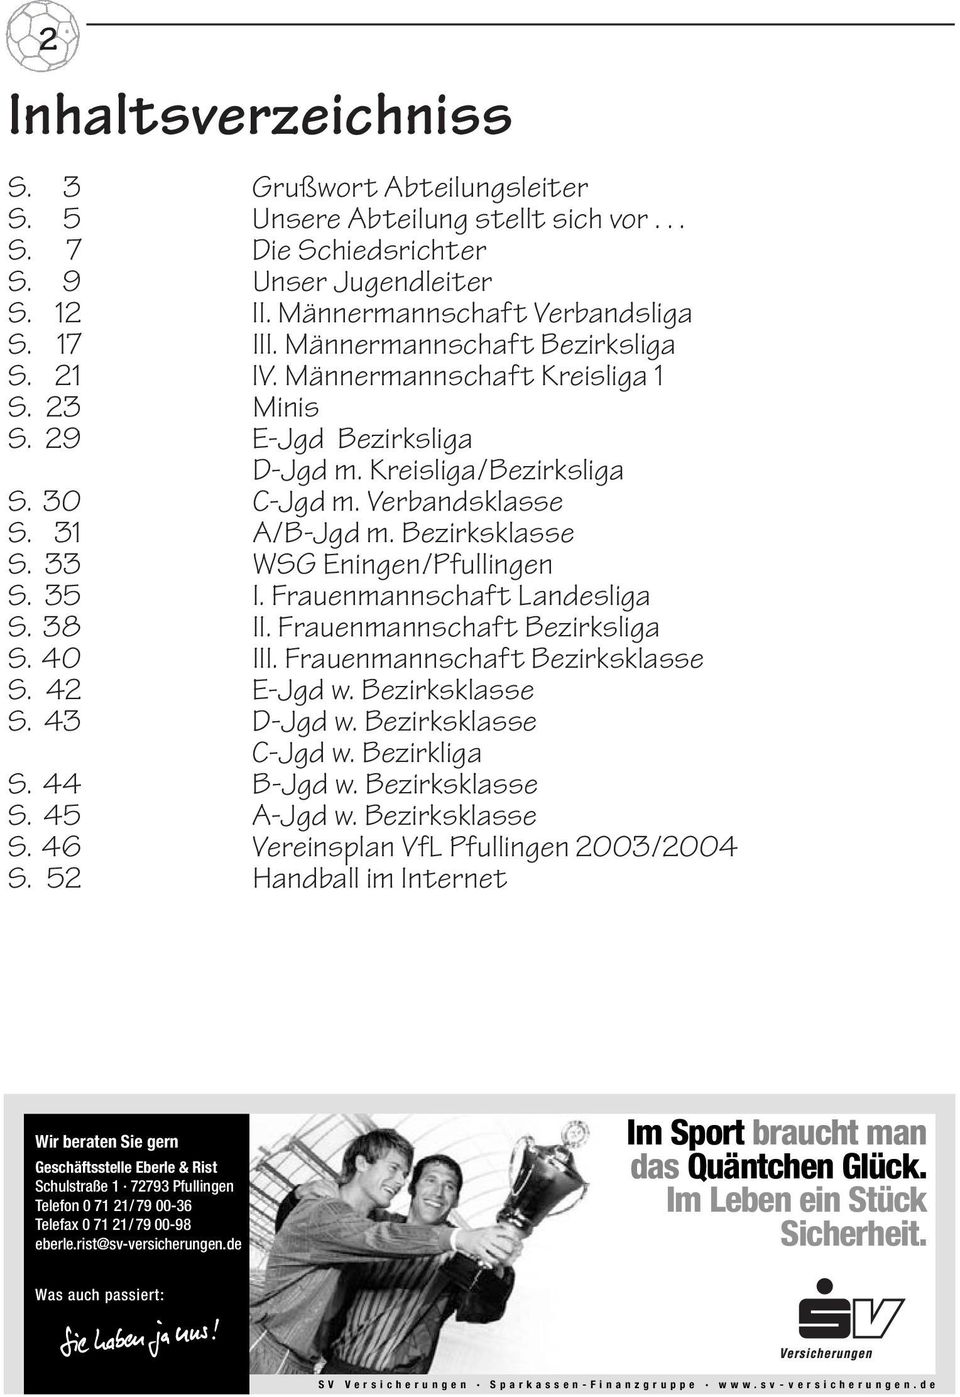 33 WSG Eningen/Pfullingen S. 35 I. Frauenmannschaft Landesliga S. 38 II. Frauenmannschaft Bezirksliga S. 40 III. Frauenmannschaft Bezirksklasse S. 42 E-Jgd w. Bezirksklasse S. 43 D-Jgd w.